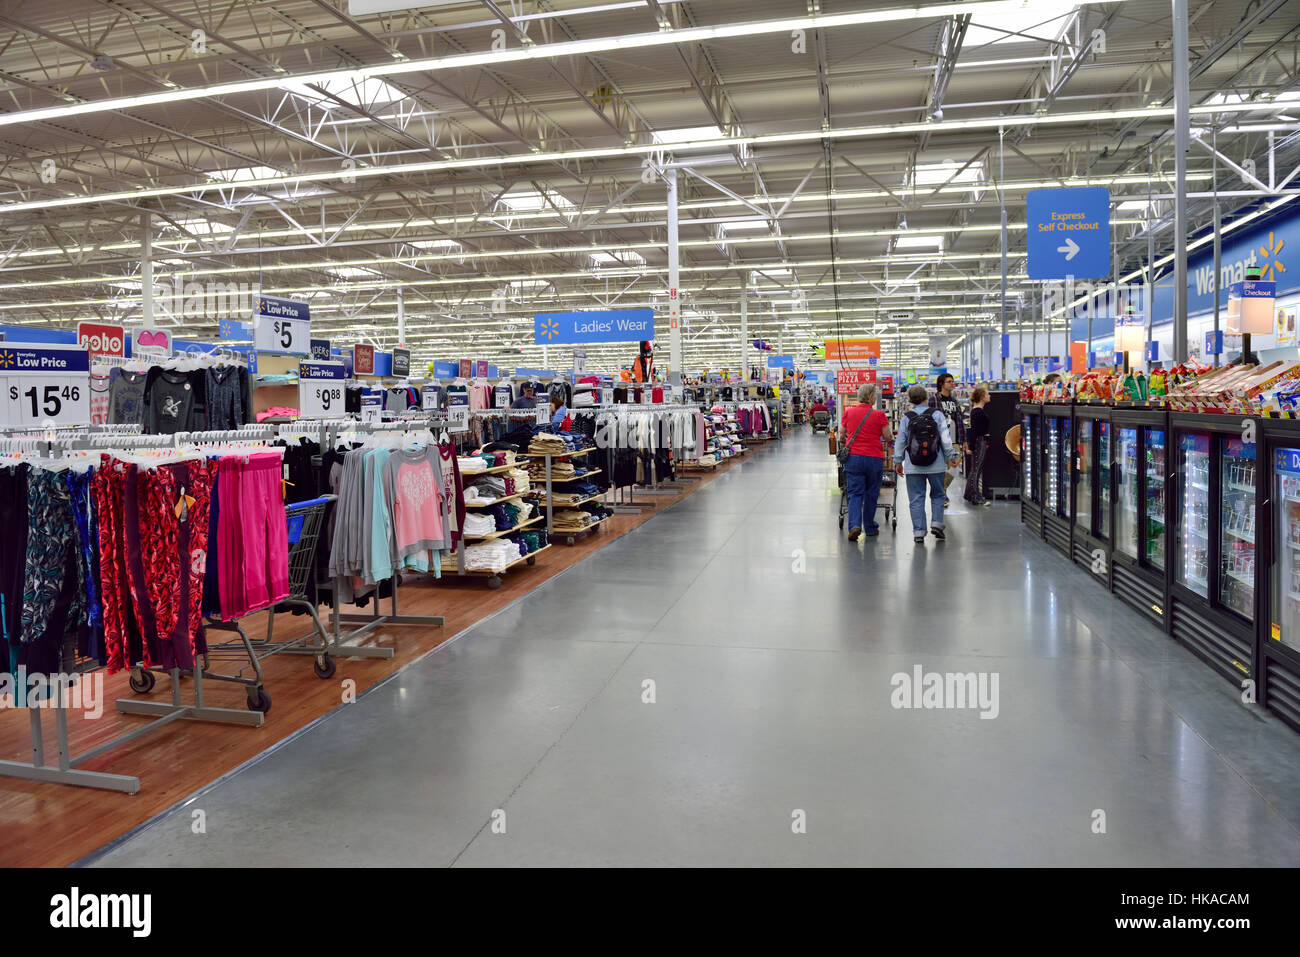 Inside Wallmart superstore with long aisle, Arizona, USA Stock Photo